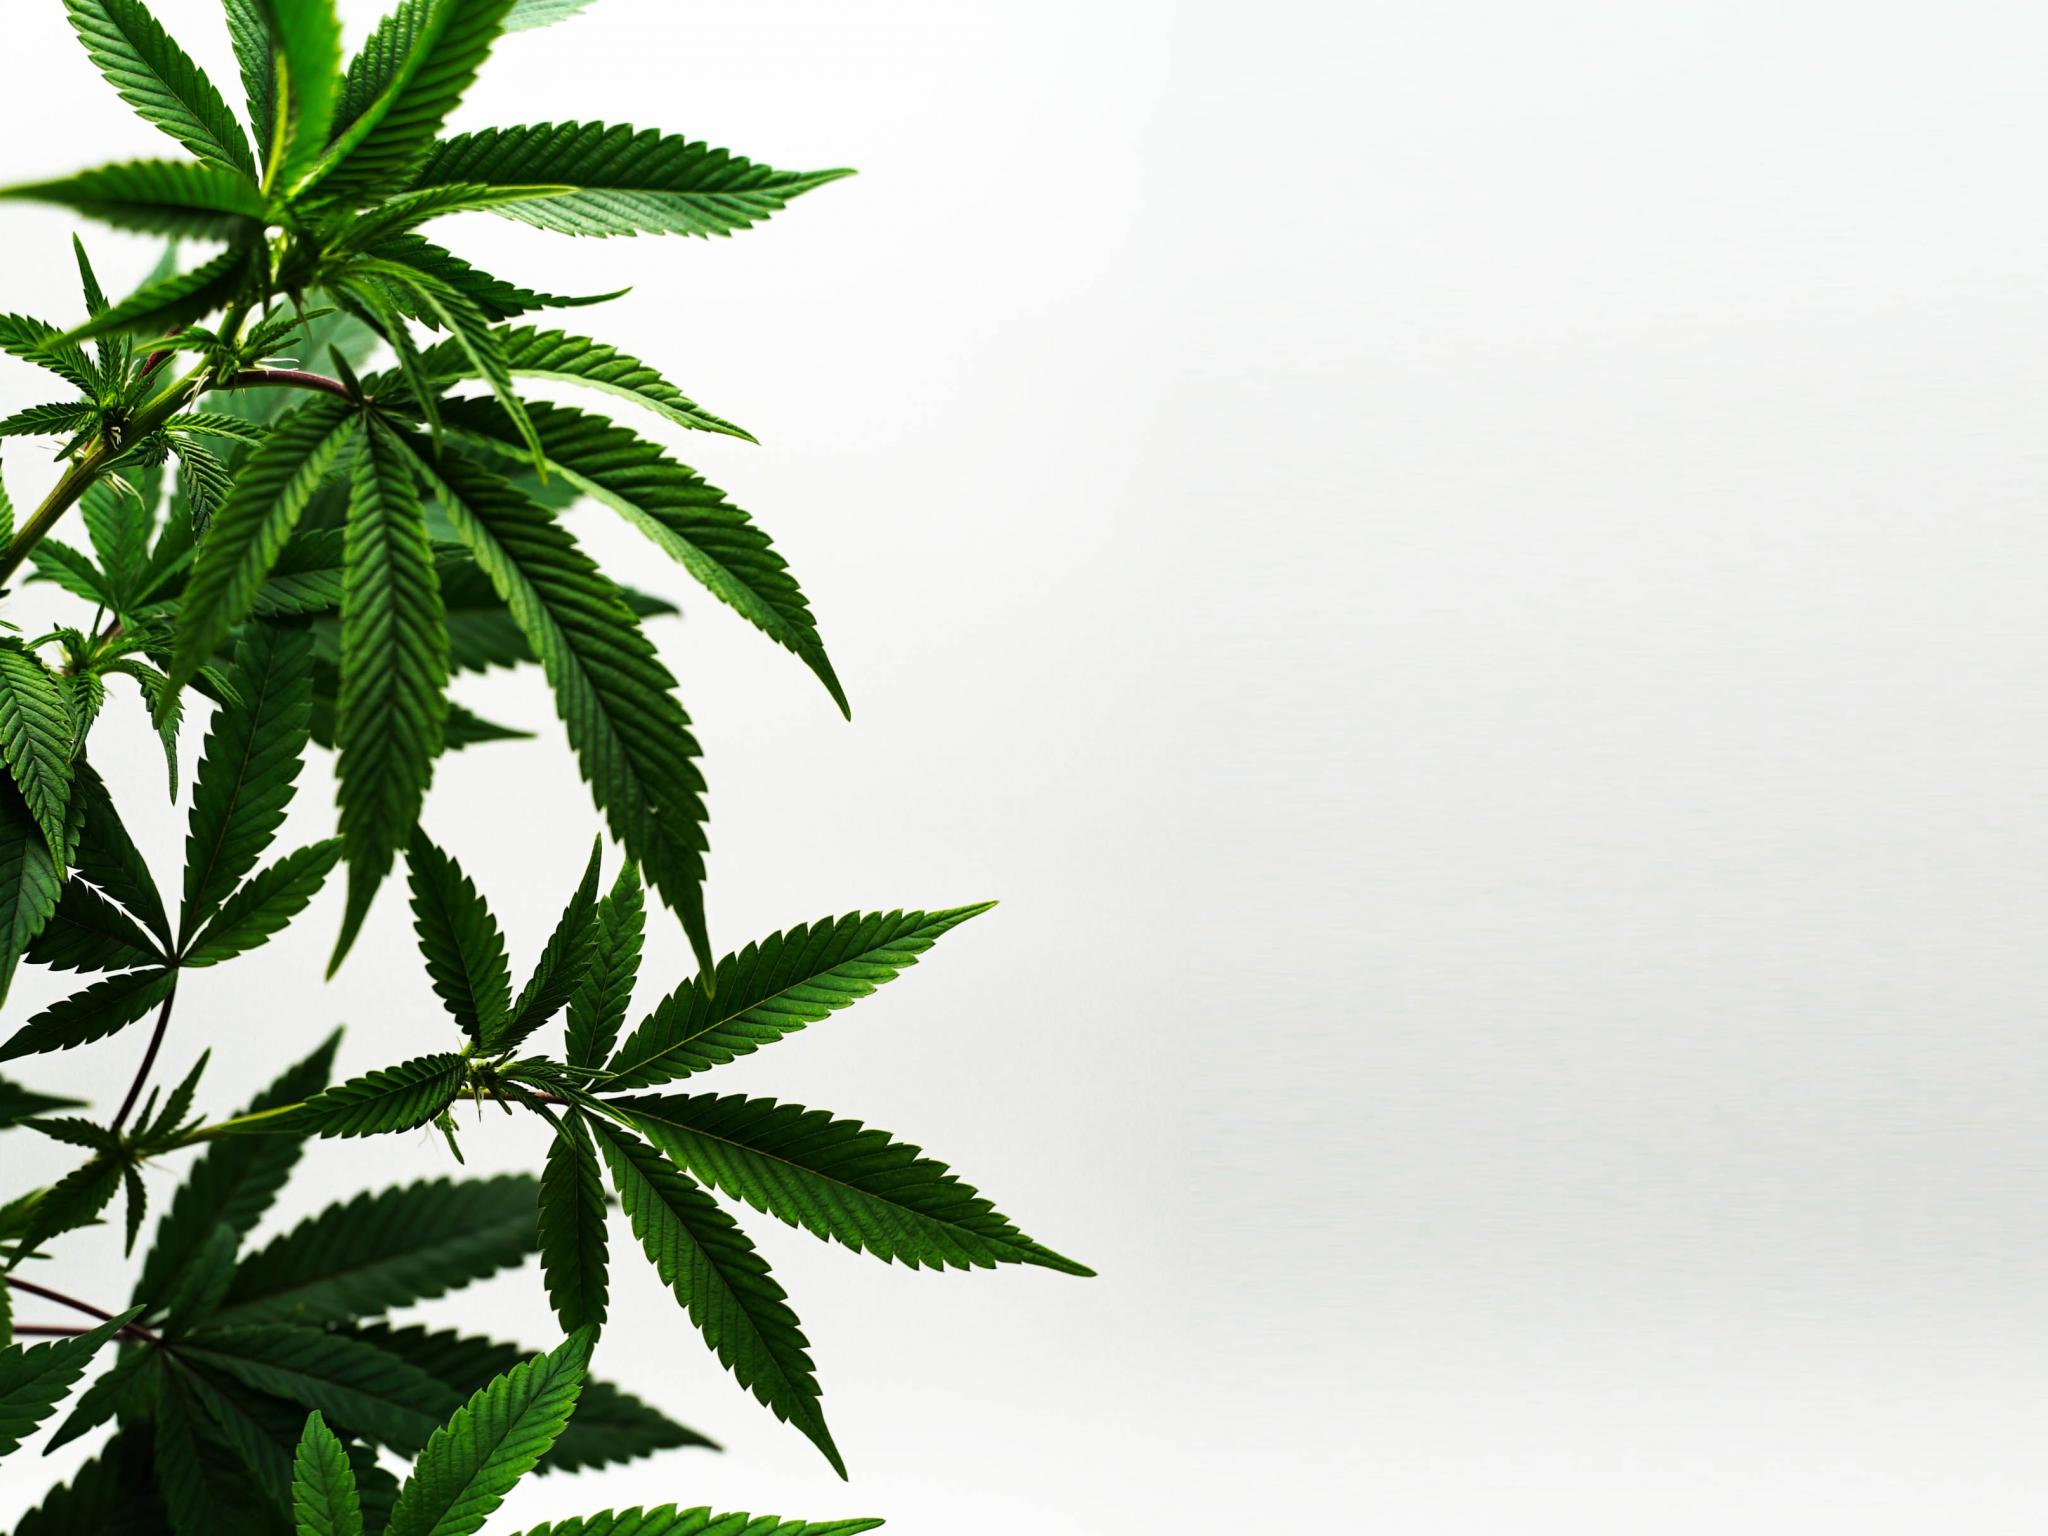  vivo-cannabis-q3-revenue-improves-19-yoy-driven-by-increased-international-sales 